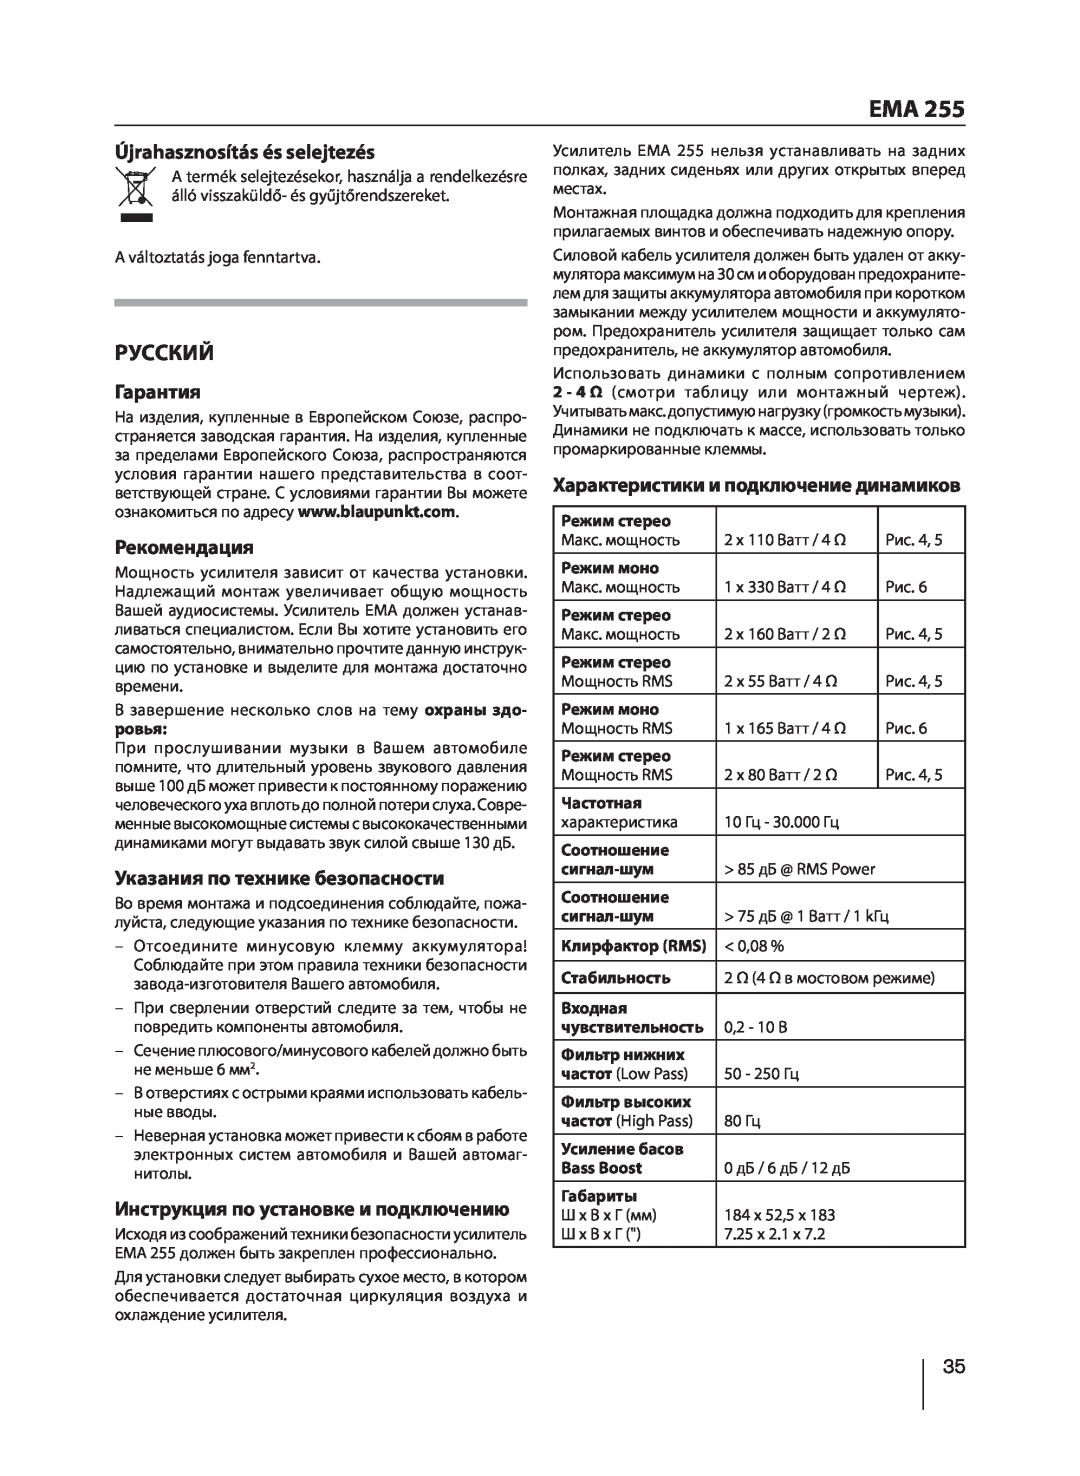 Blaupunkt EMA 255 manual Русский, Újrahasznosítás és selejtezés, Гарантия, Рекомендация, Указания по технике безопасности 